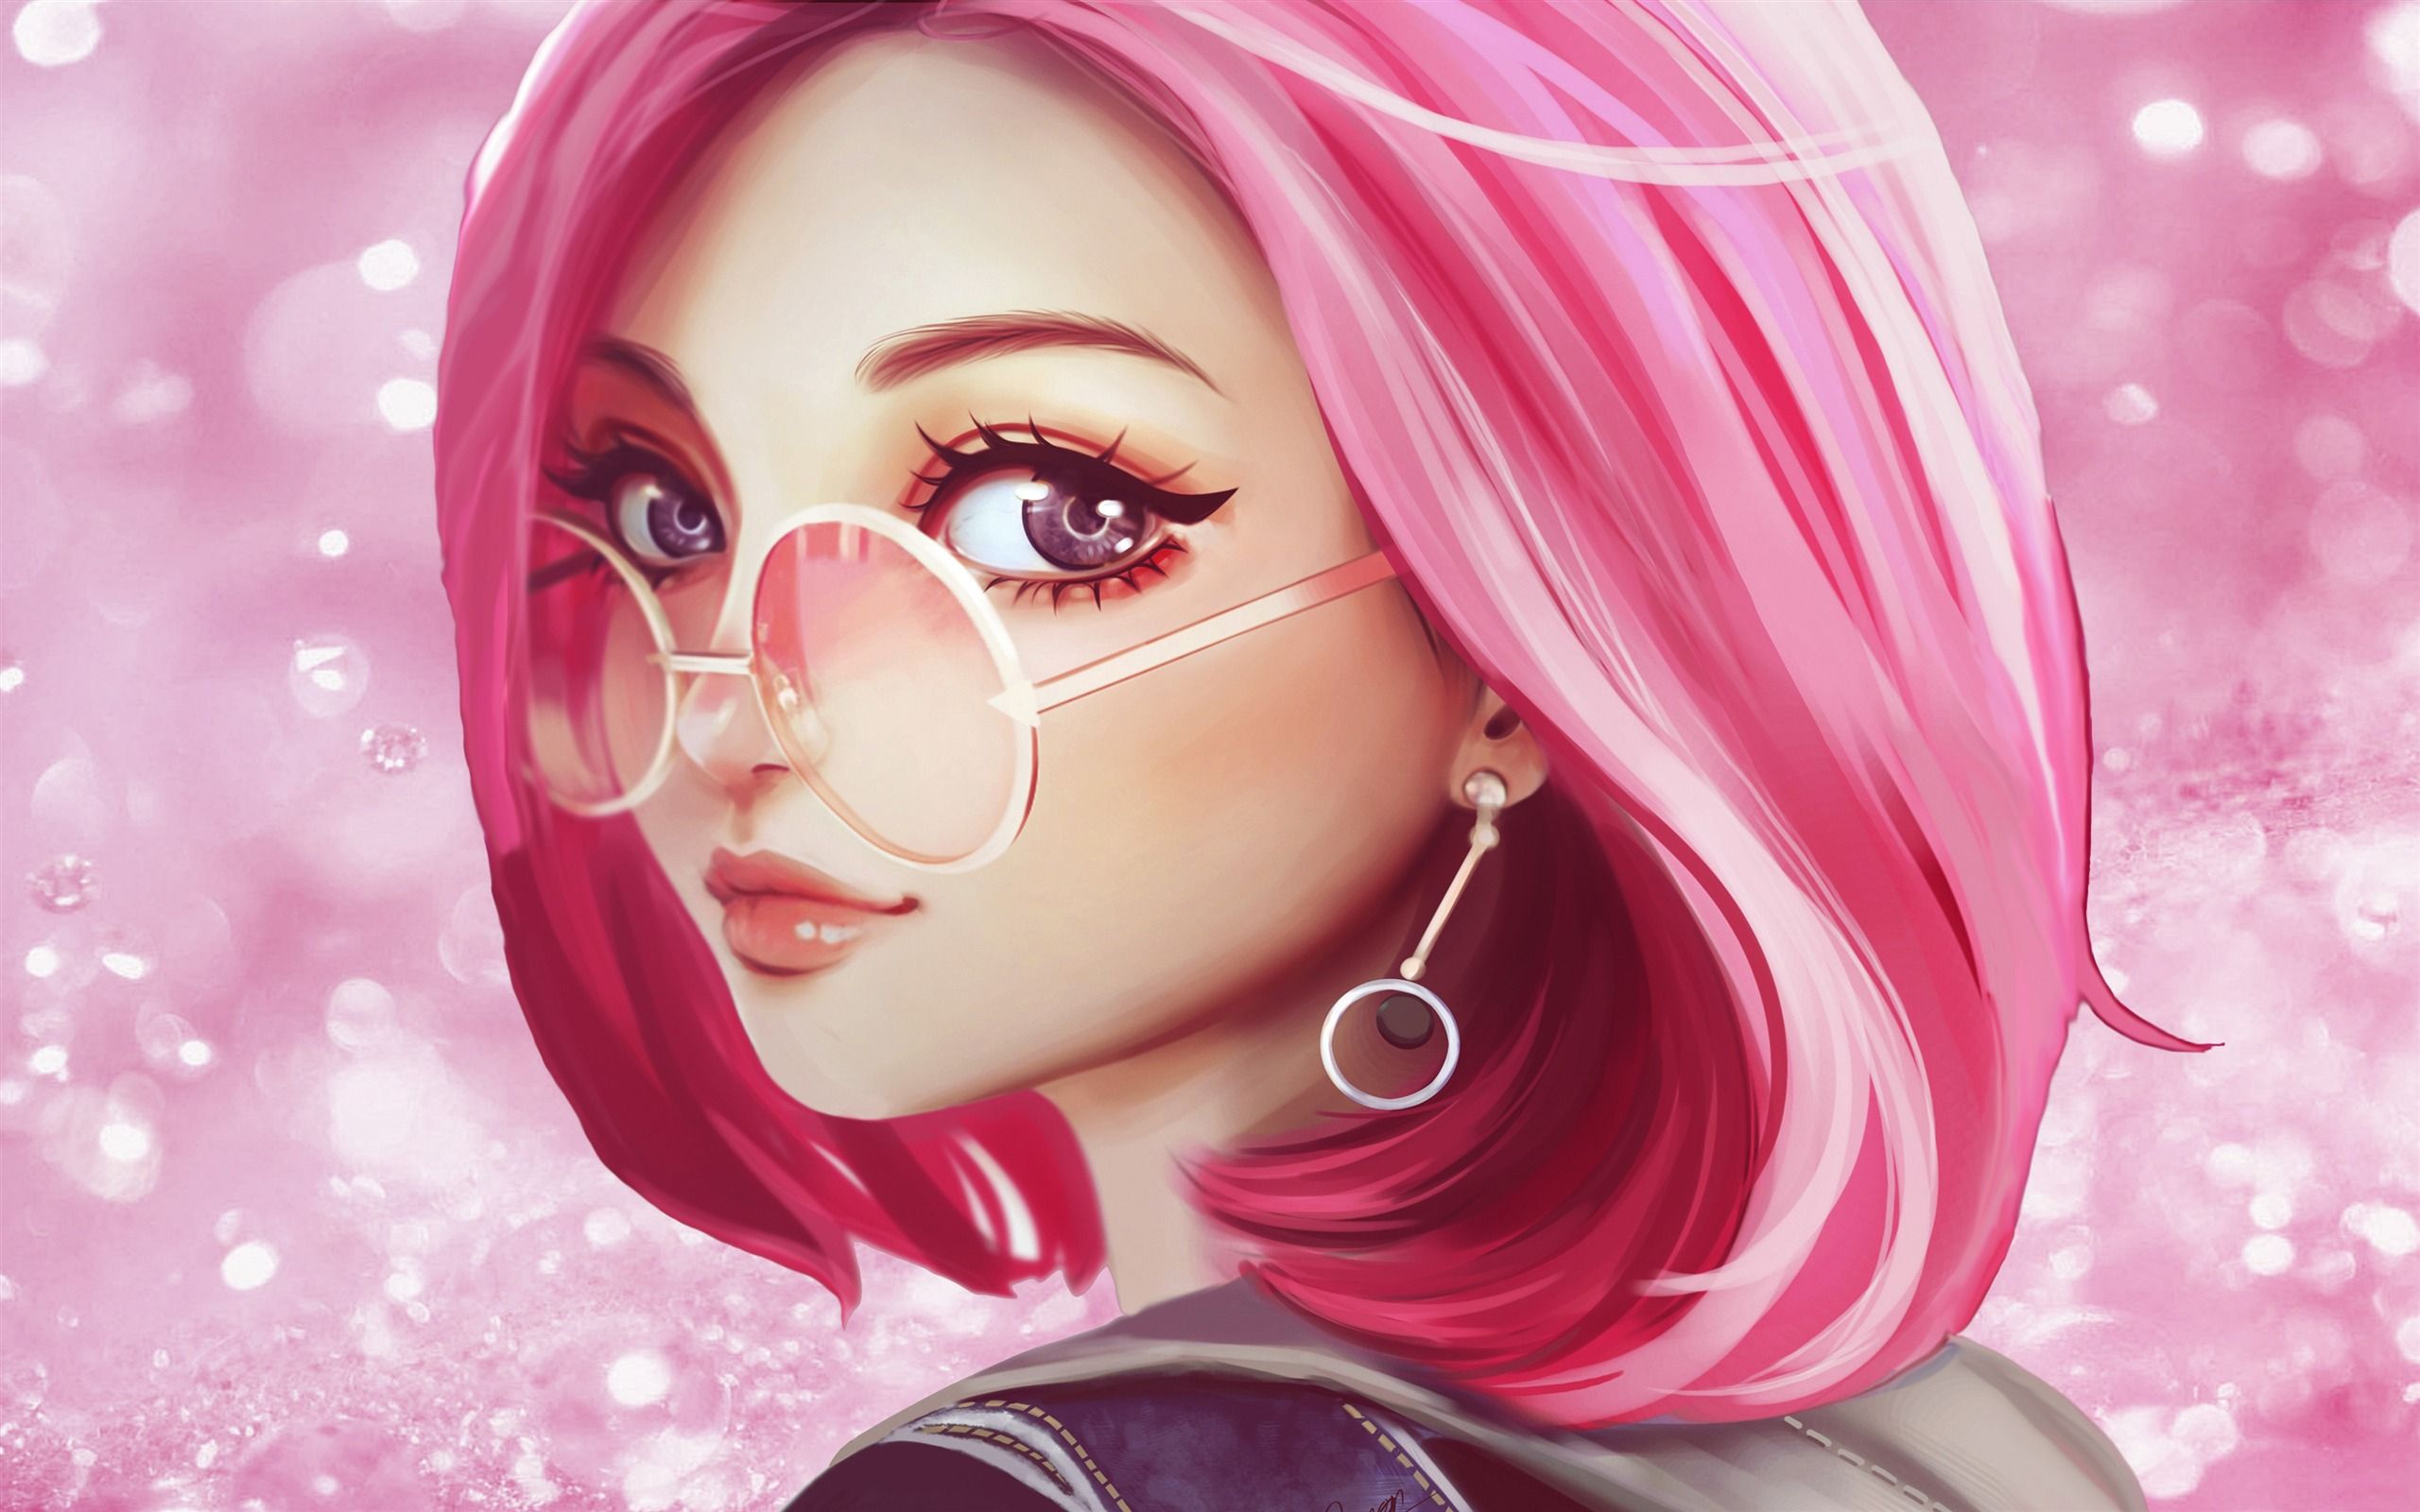 Cute Girl Pink Hair Sunglasses Anime .10wallpaper.com